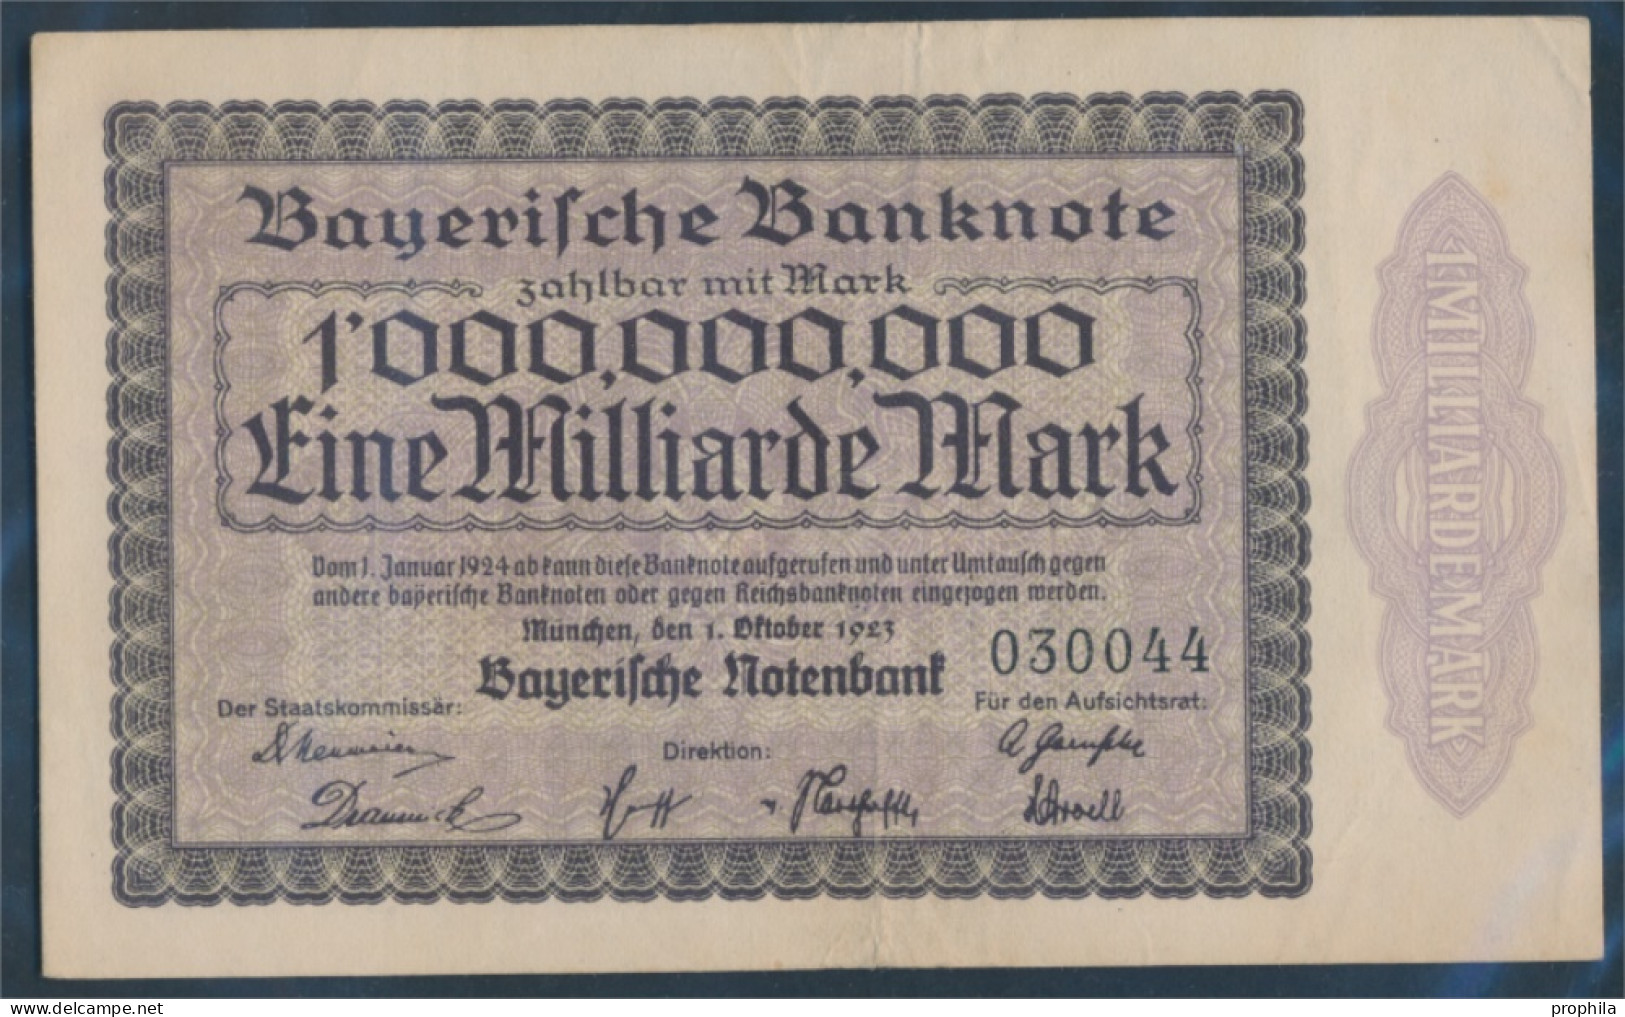 Bayern Rosenbg: BAY17 Länderbanknote Bayern Gebraucht (III) 1923 1 Mrd. Mark (10288406 - 1 Mrd. Mark